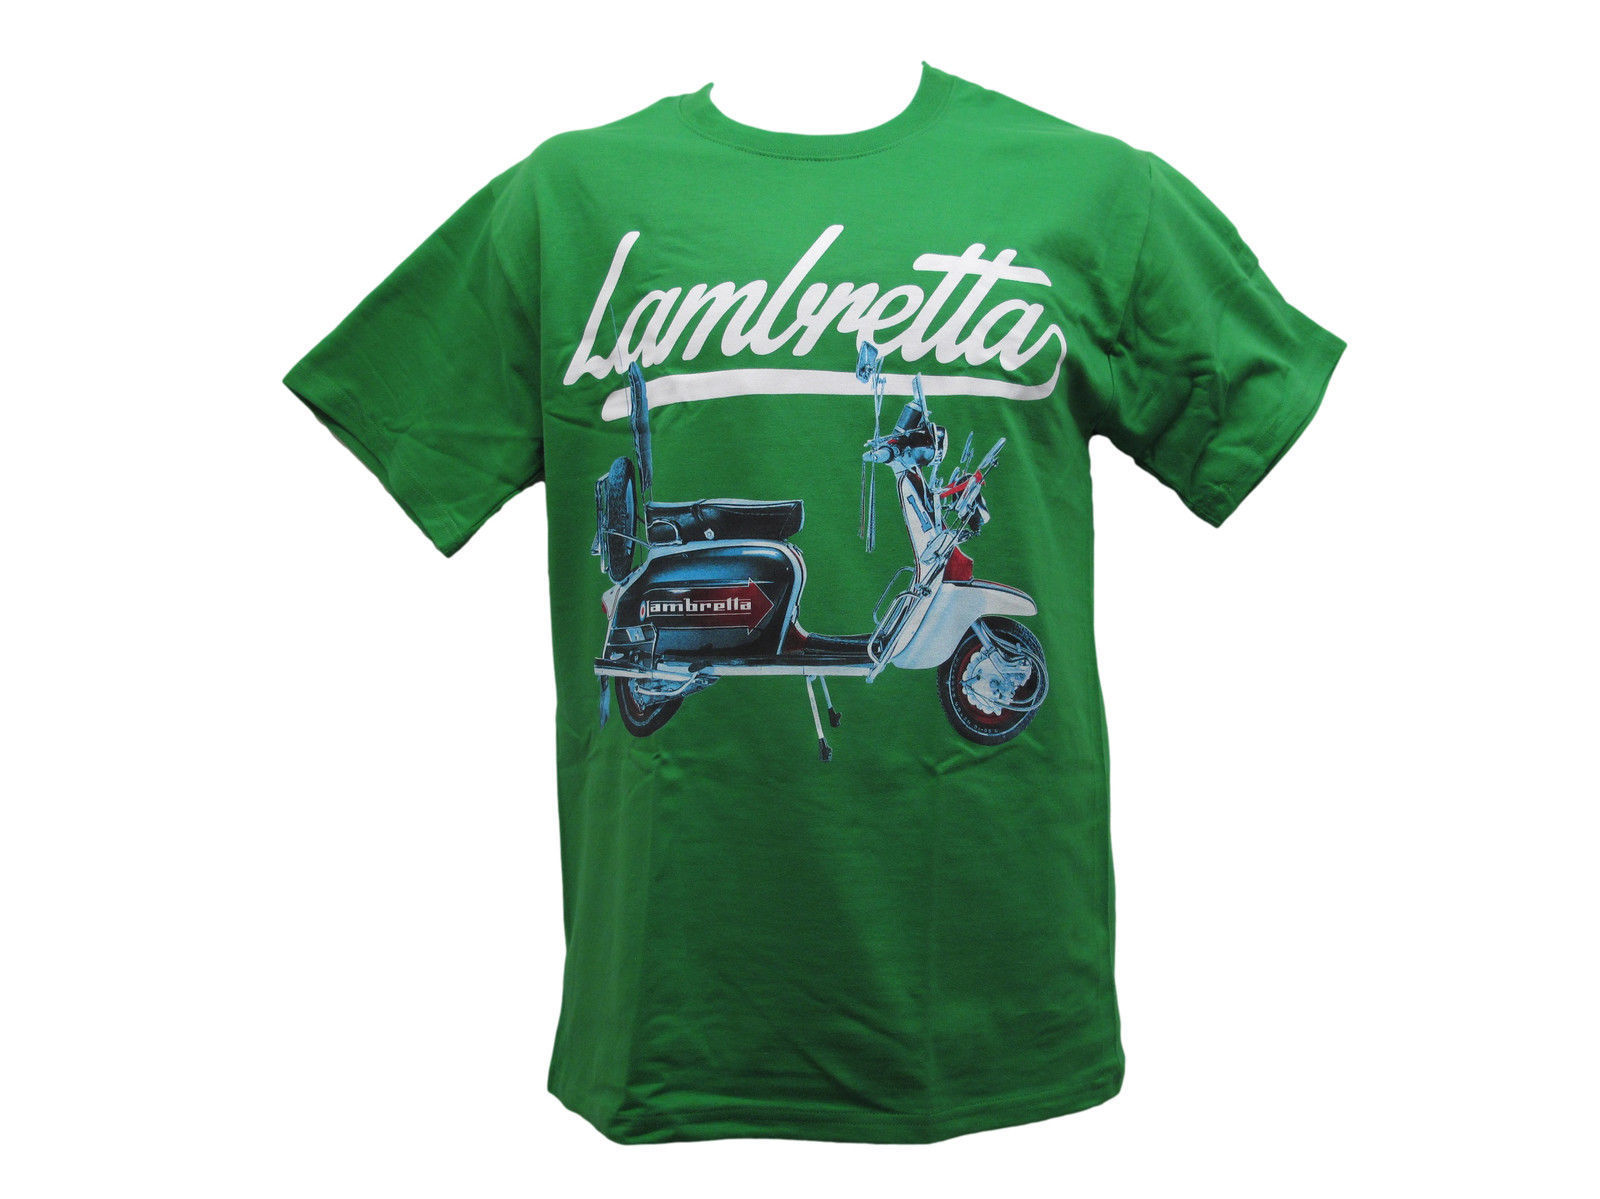 Mens Lambretta Scooter Retro Mod Tee T Shirts Sizes S M L Xl 2xl 3xl 6 Colours Ebay